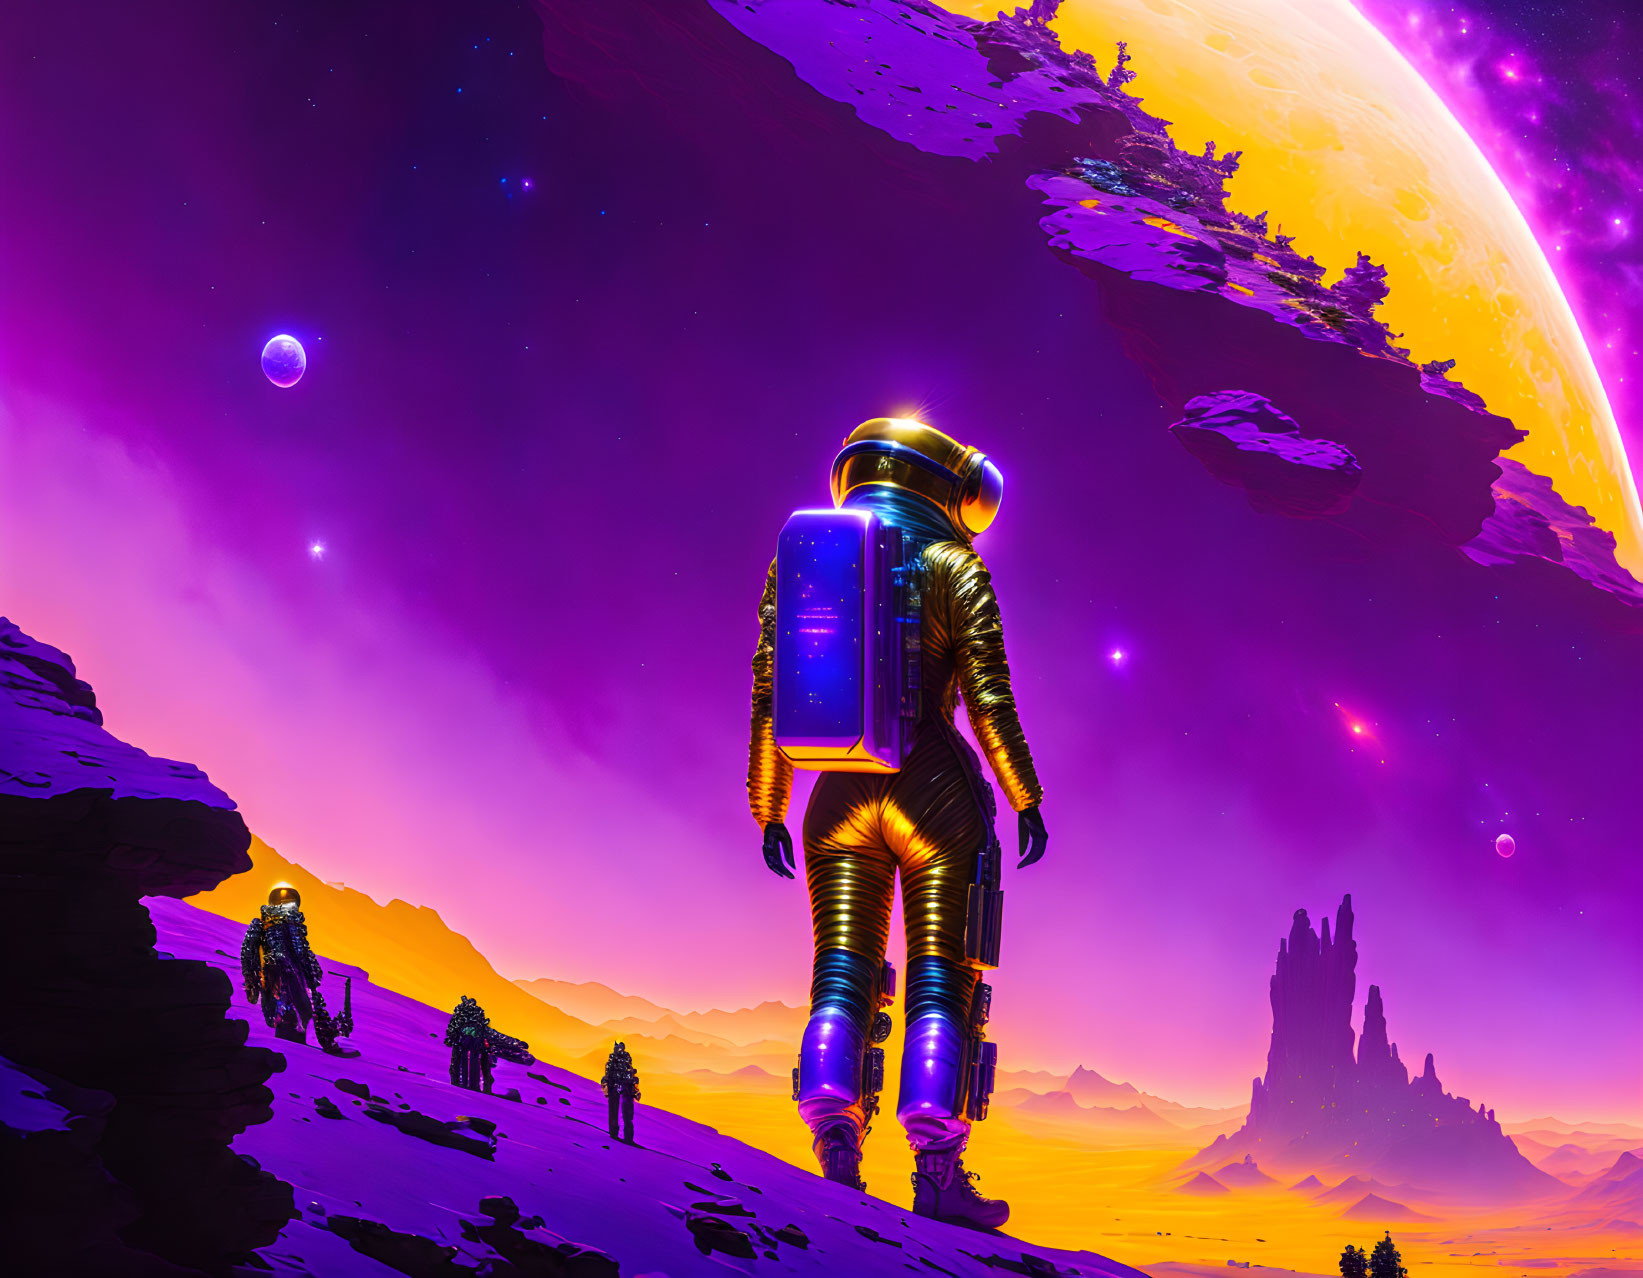 Alien landscape: Astronauts on purple sky planet with moons & floating rocks